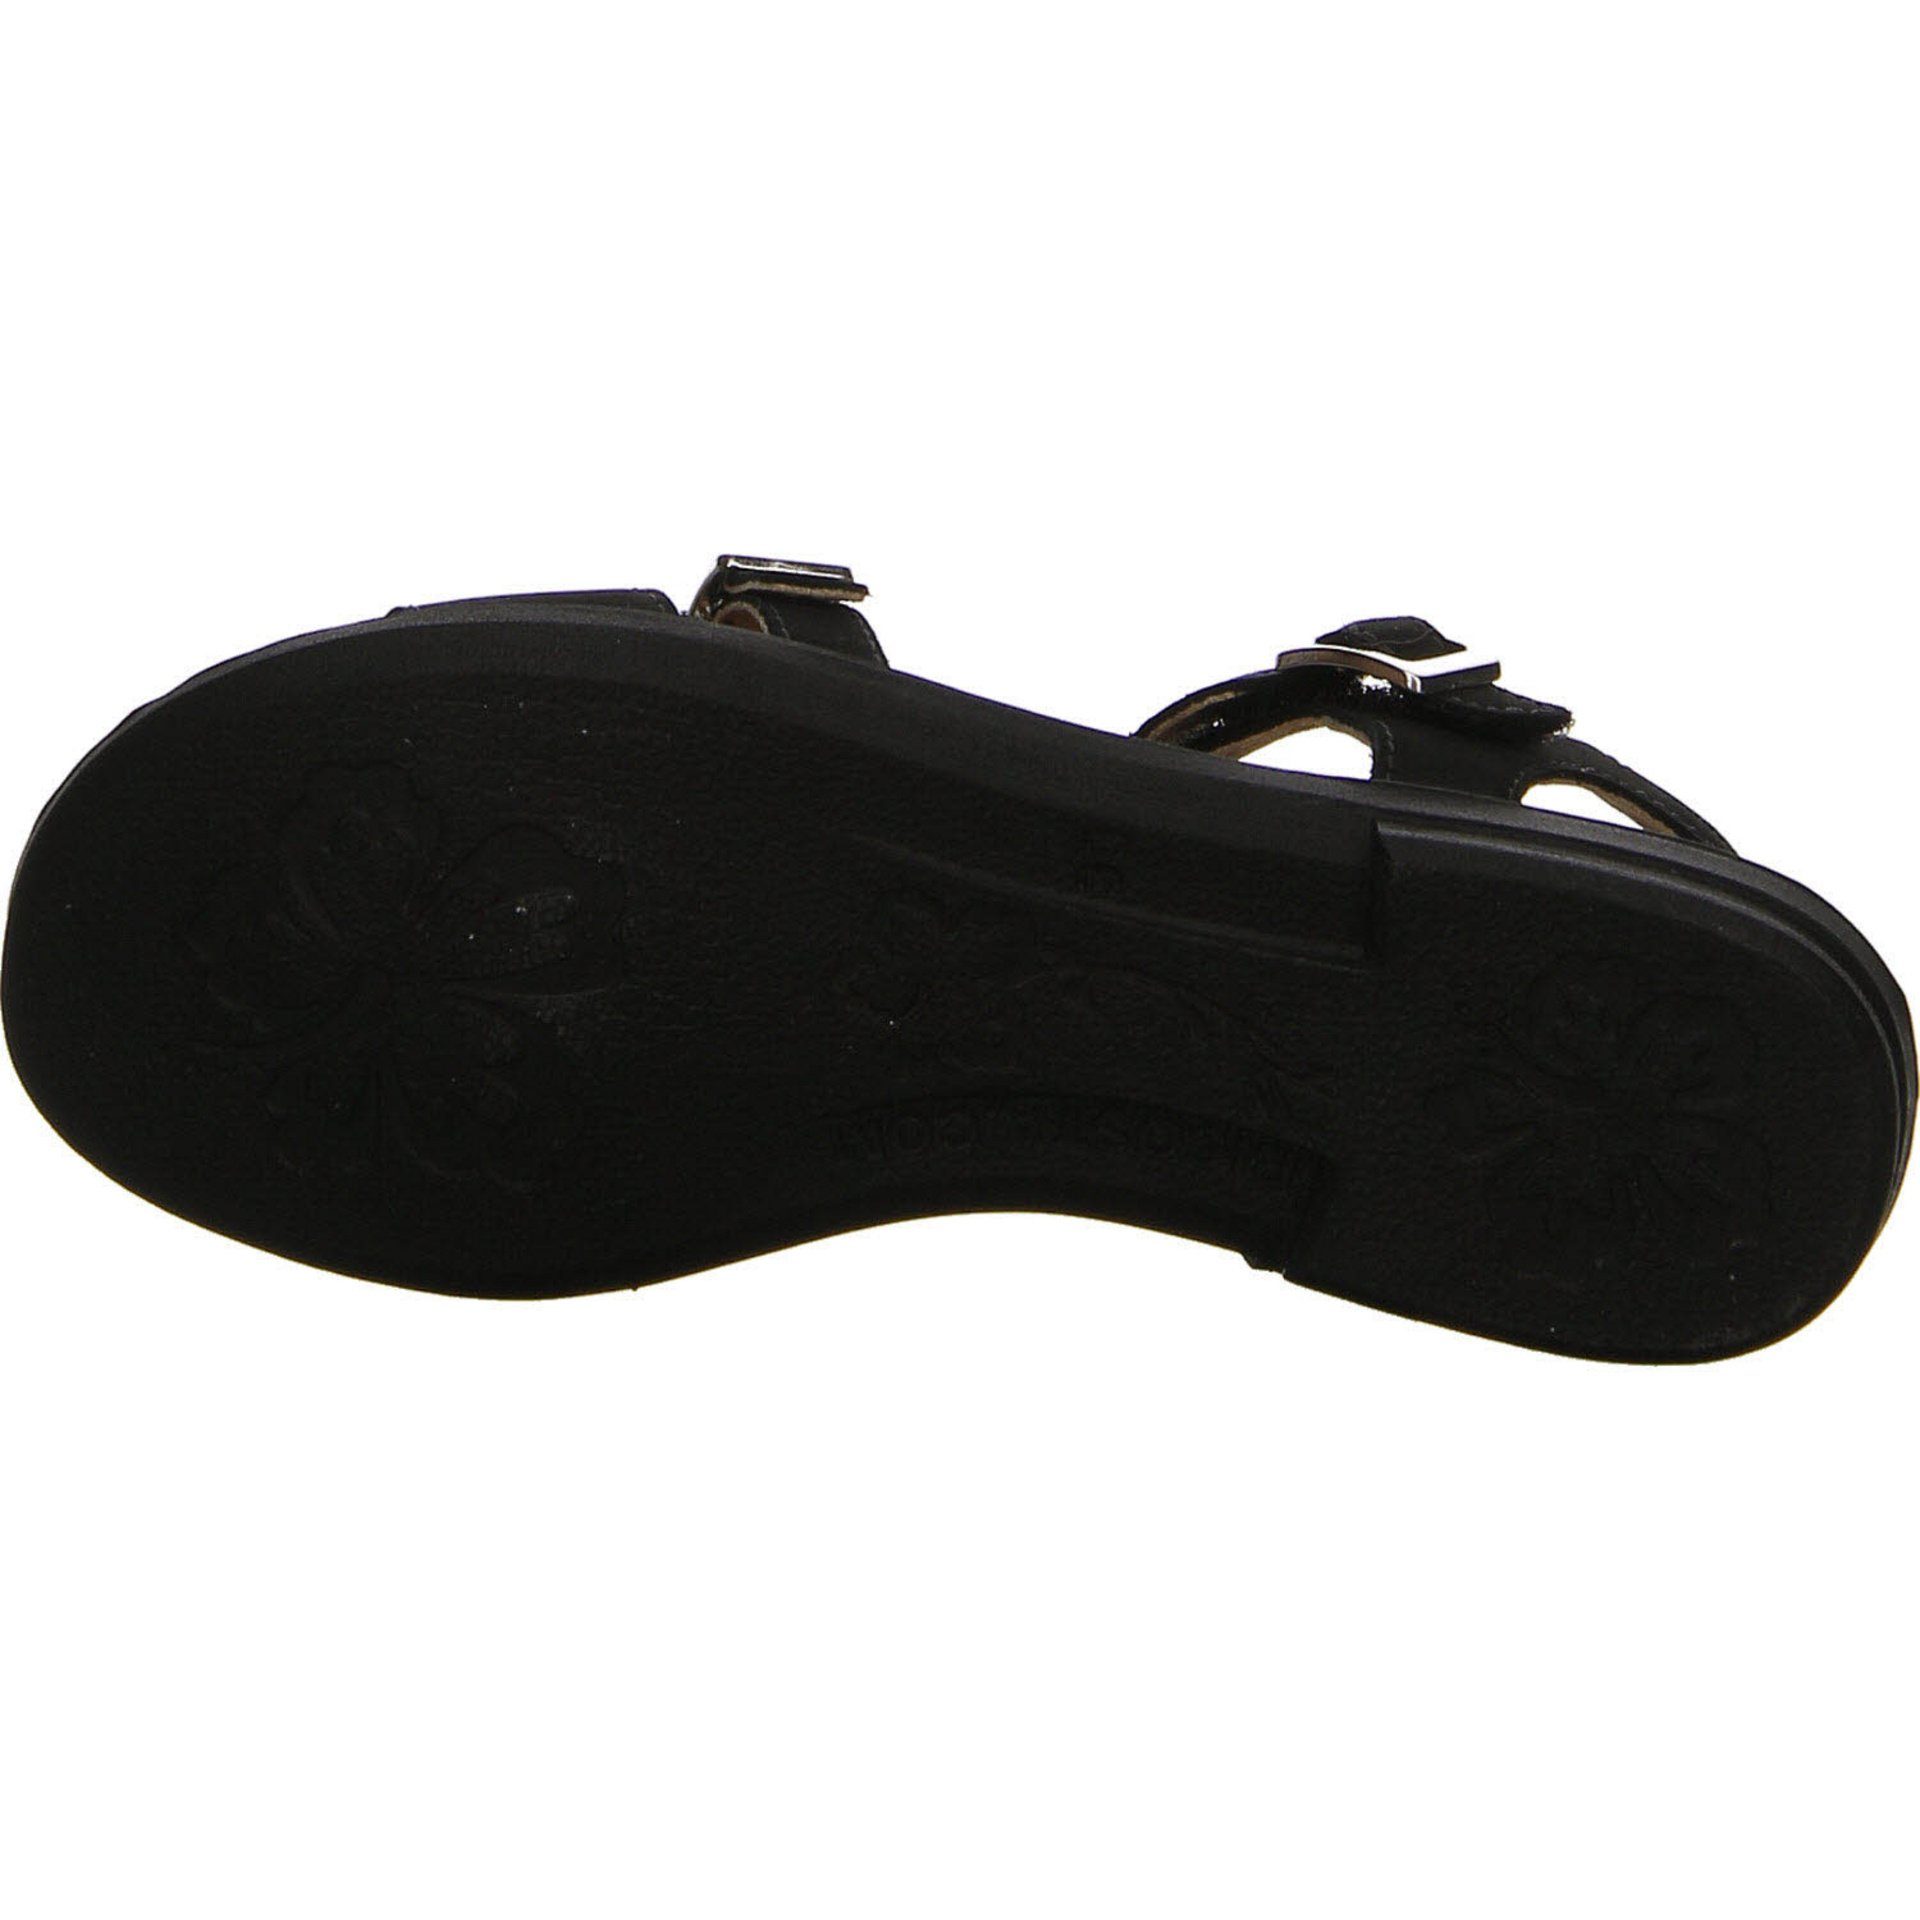 dunkel Schuhe Ricosta Sandale Kalja Sandalen Glattleder Mädchen schwarz Sandalen